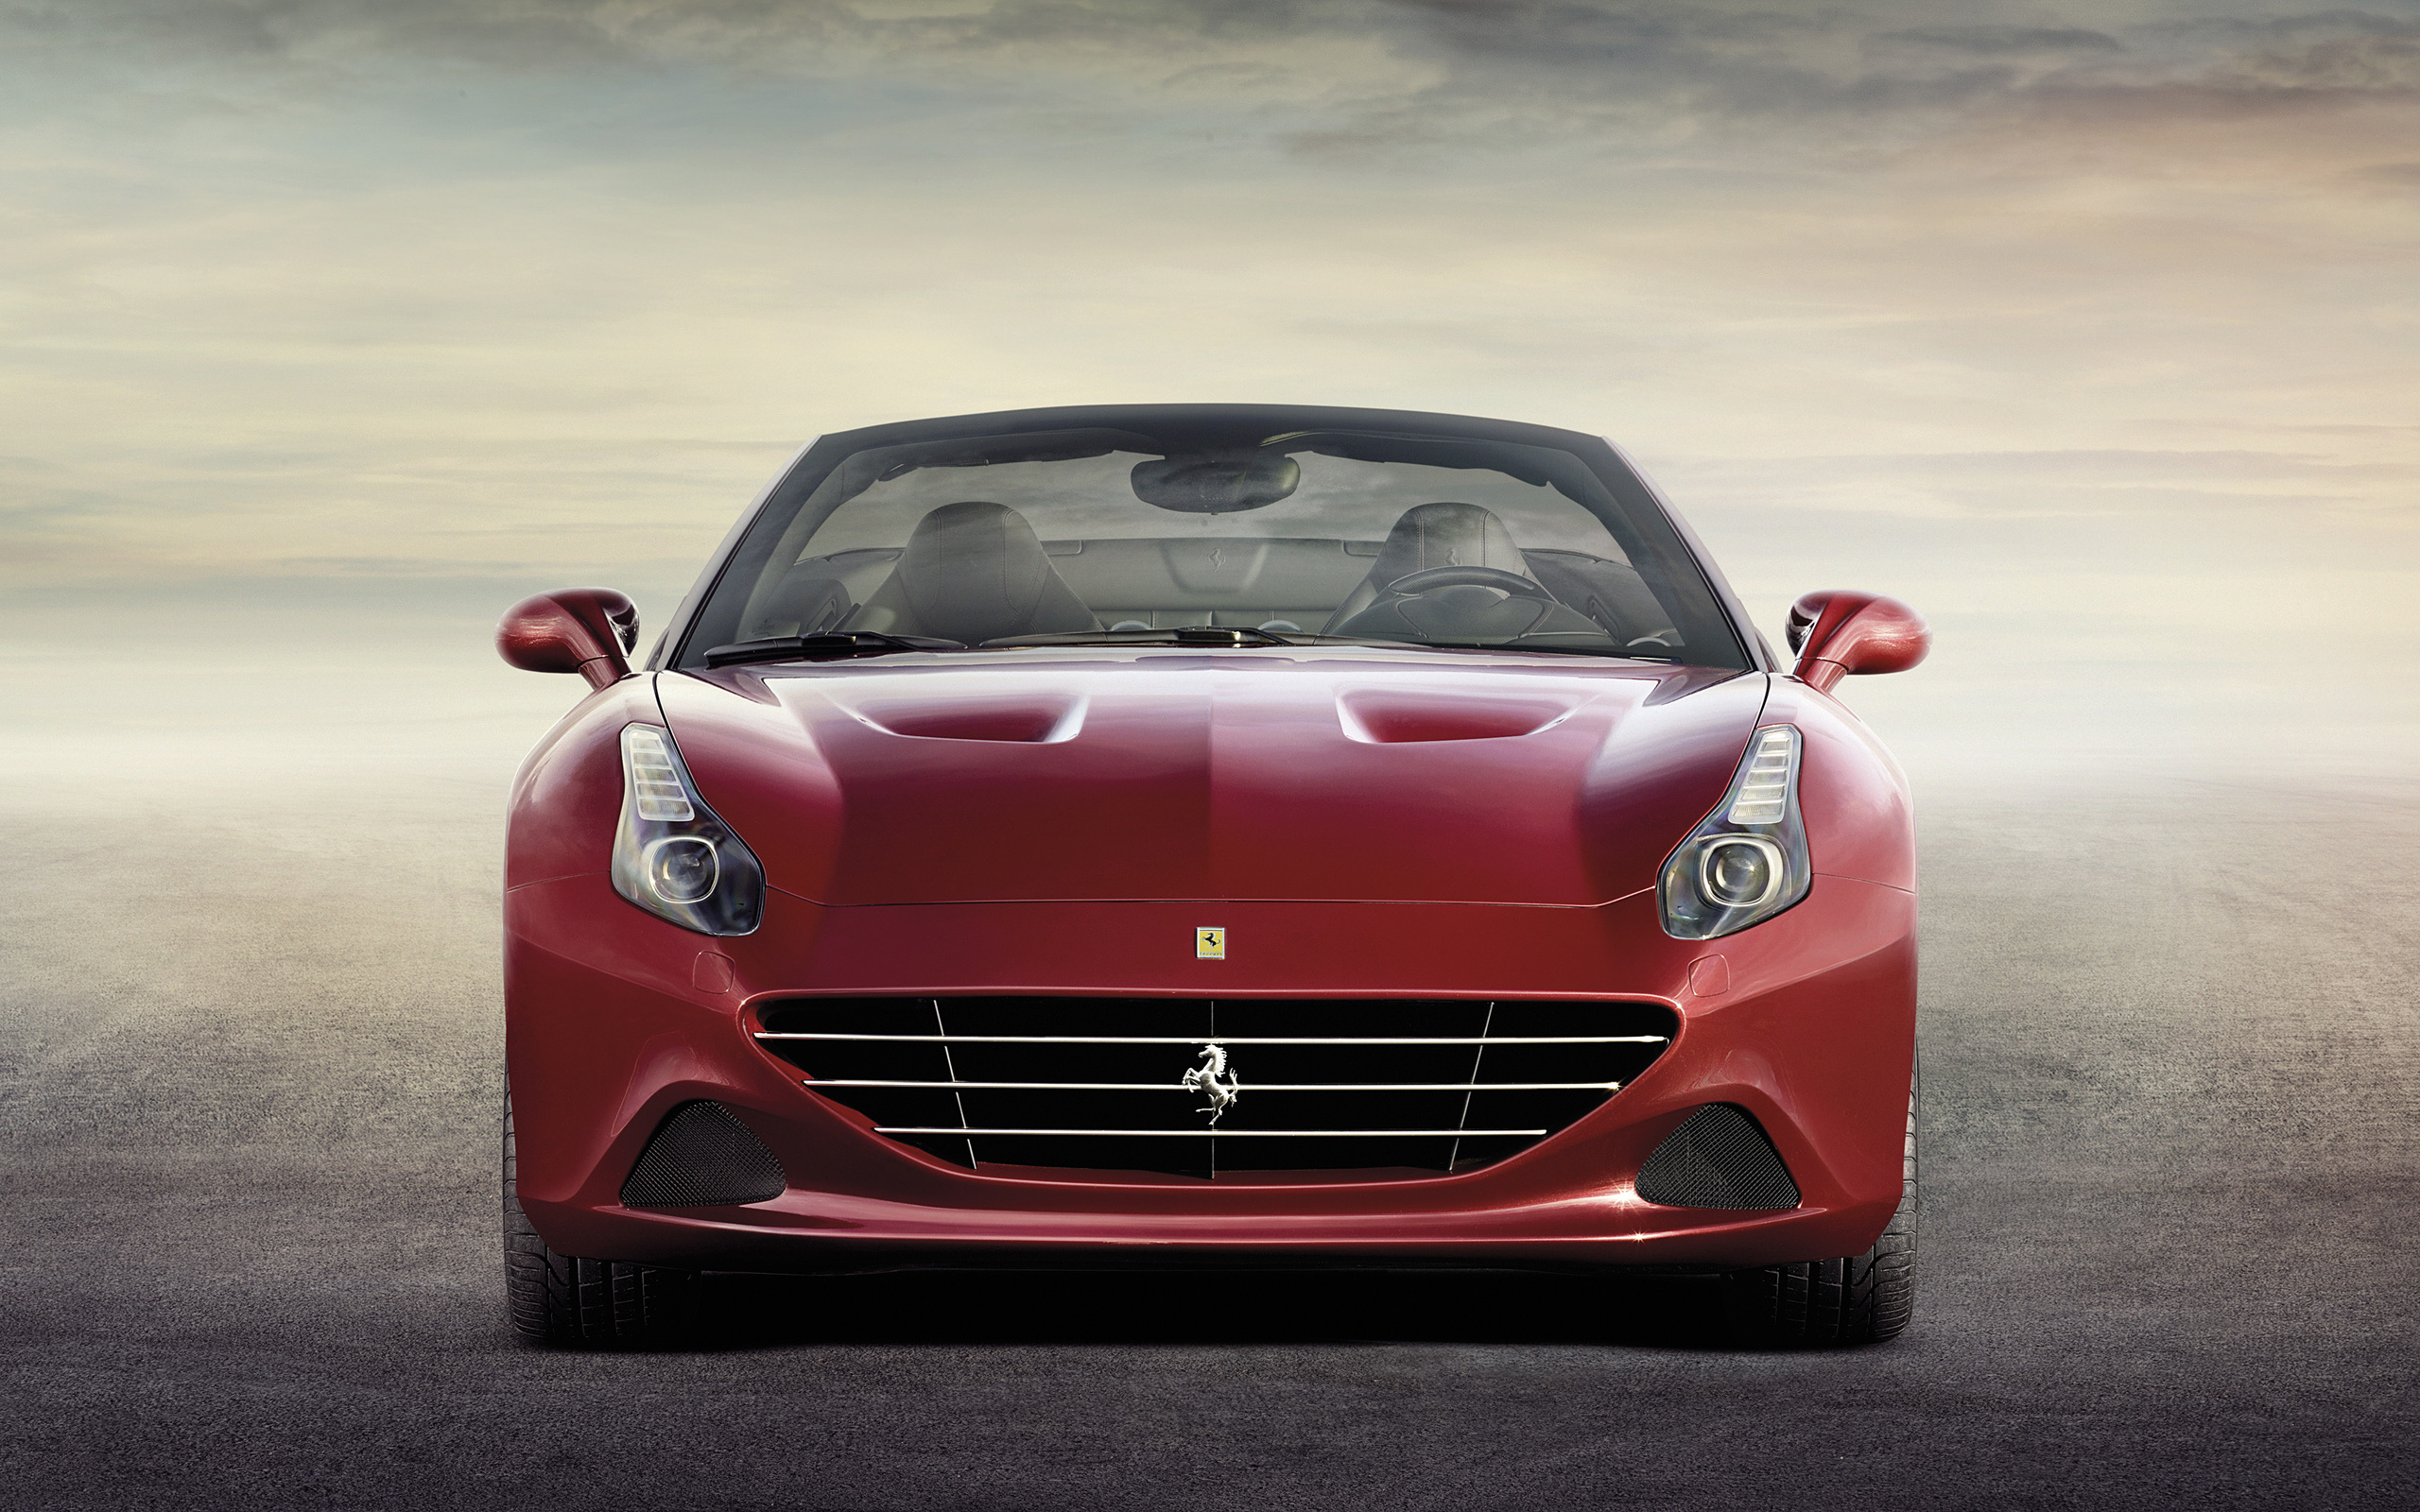 Ferrari California T, Breathtaking HD wallpaper, Exhilarating convertible, Italian beauty, 2560x1600 HD Desktop